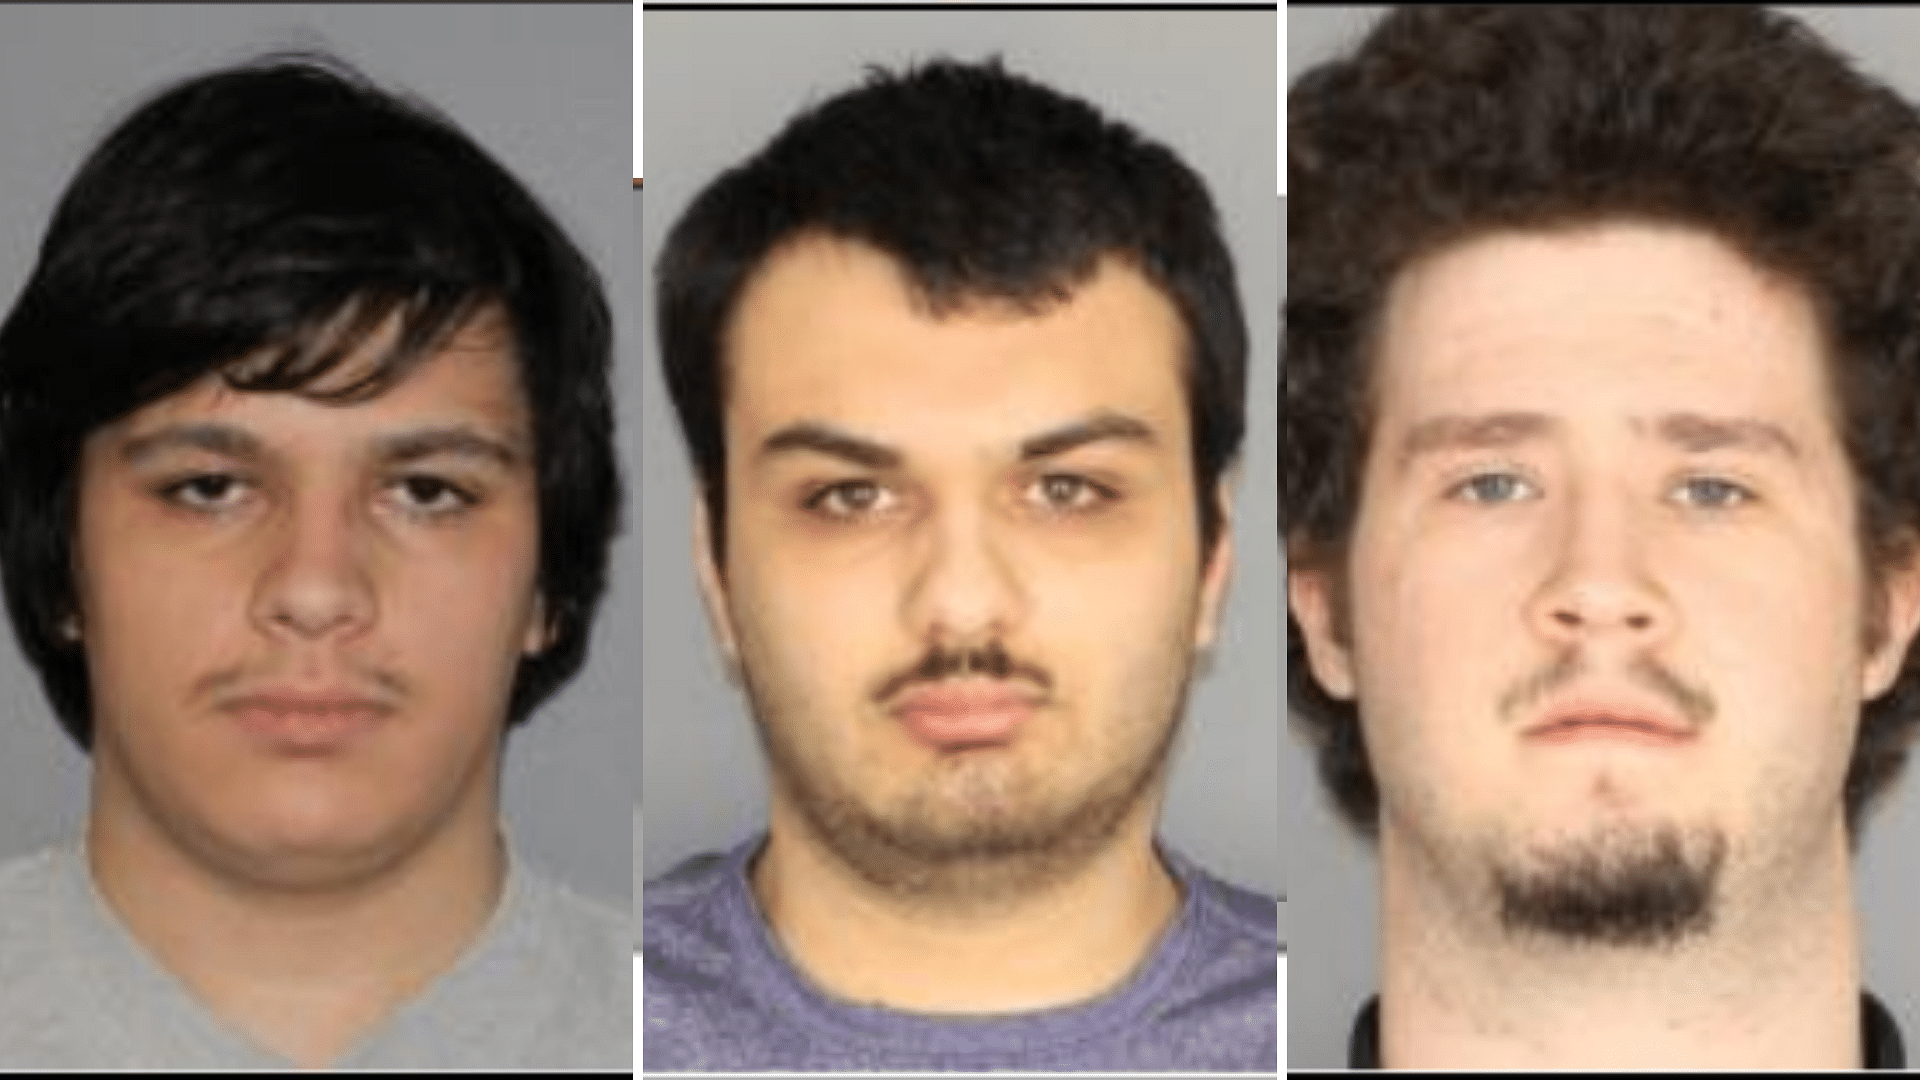 Mugshots of the three suspects.